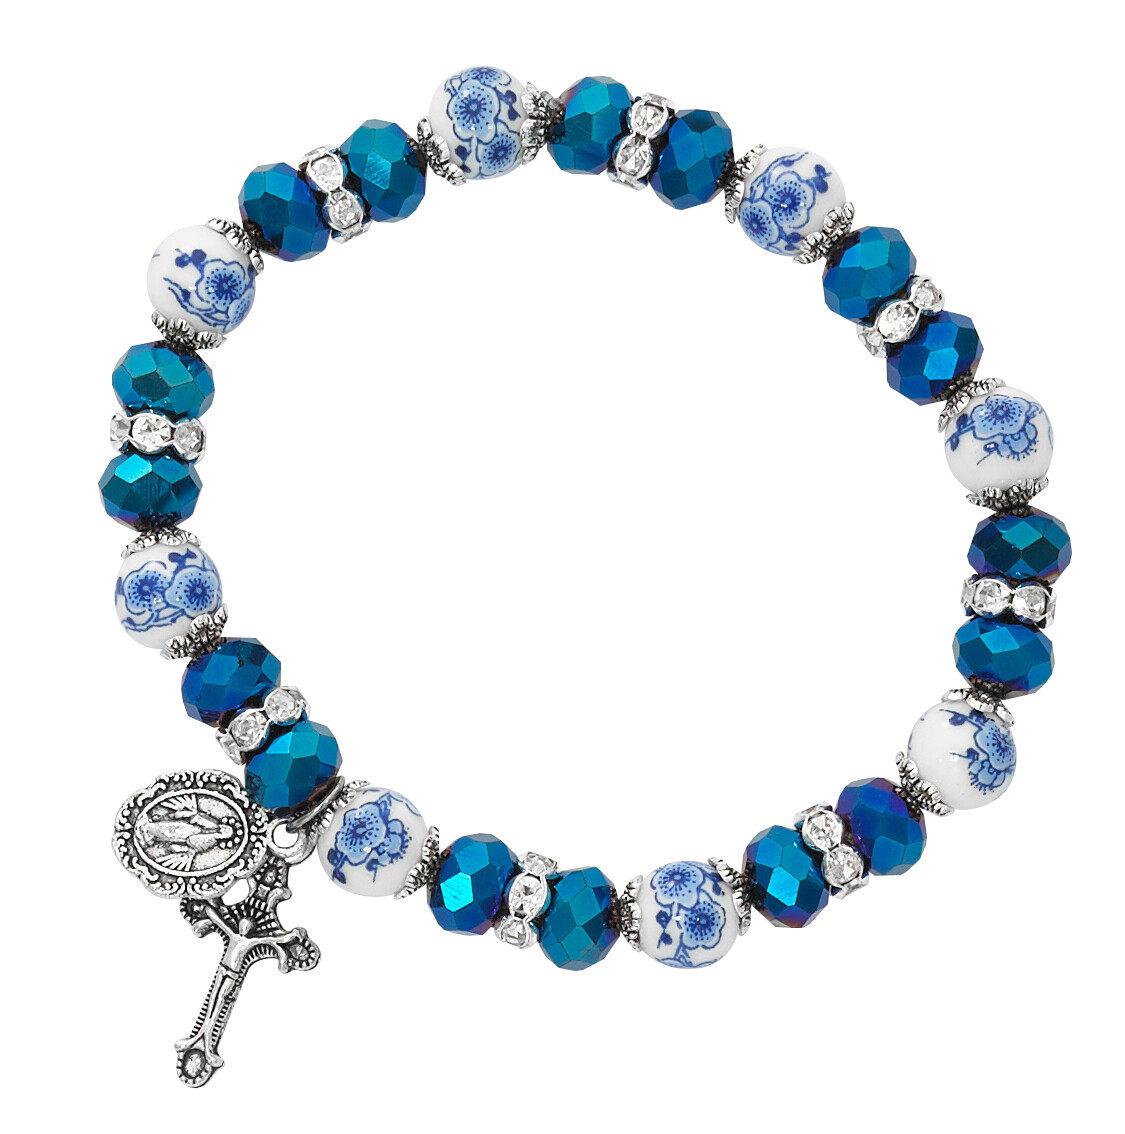 Adult Blue Metallic & Flower Ceramic Beads Stretch Bracelet